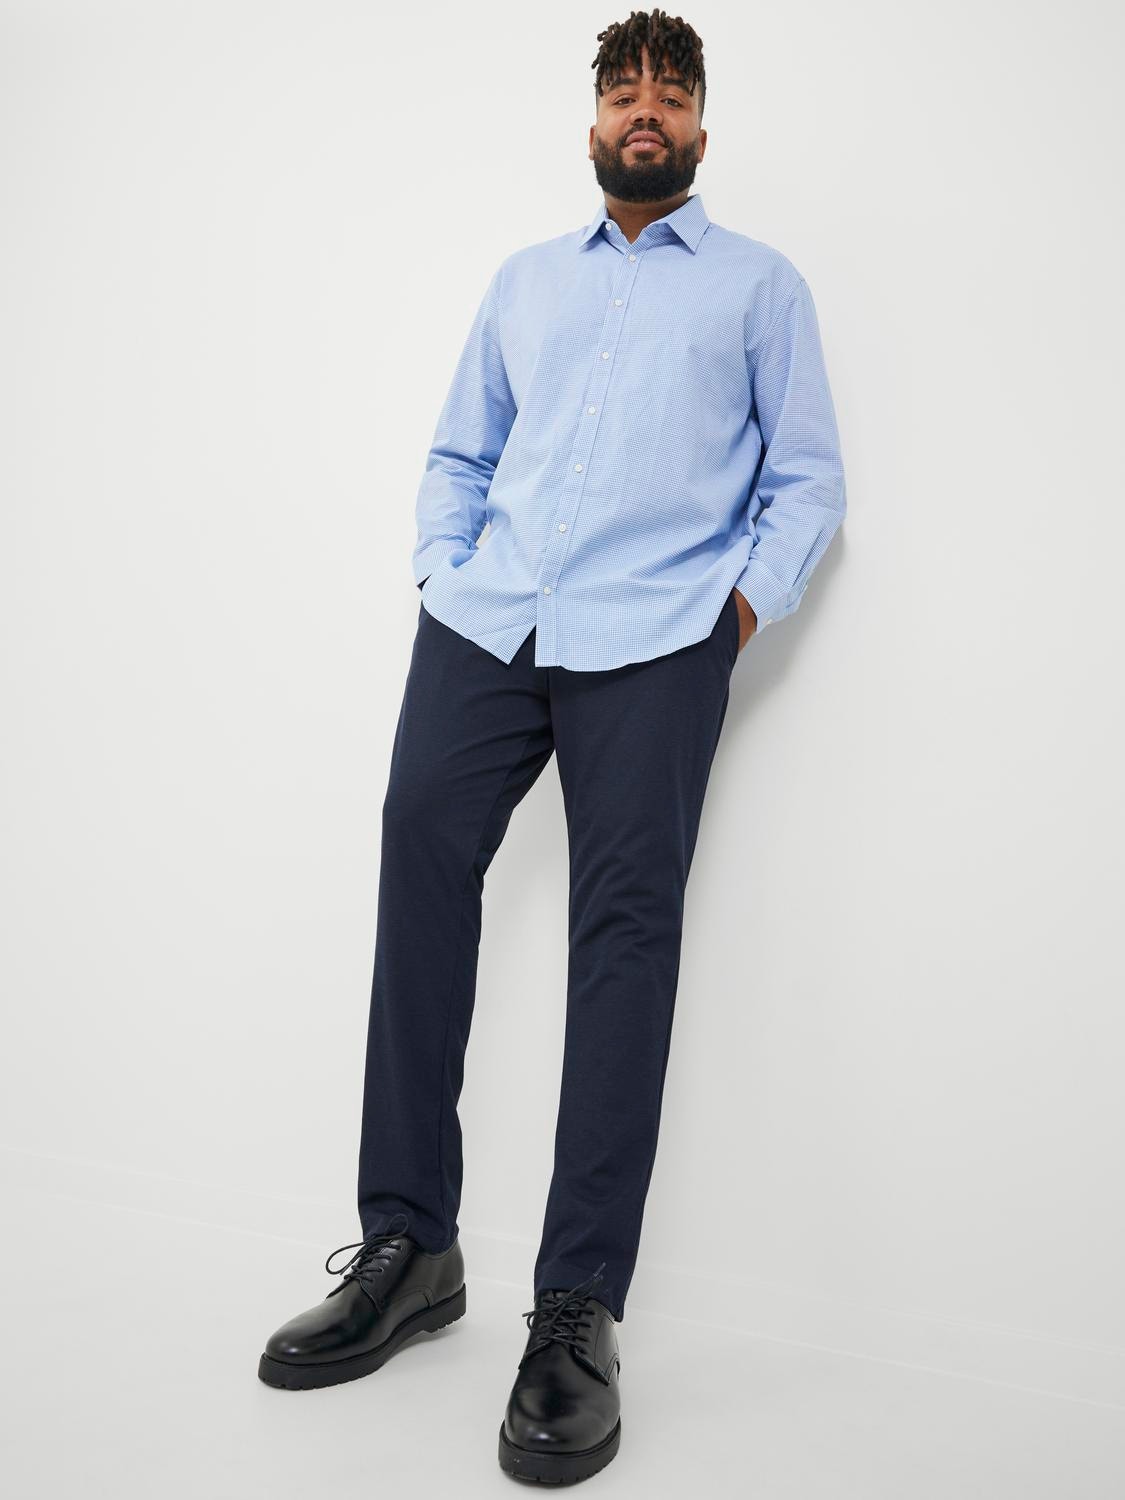 Jack & Jones Plus Size Slim Fit Chino trousers -Navy Blazer - 12250503